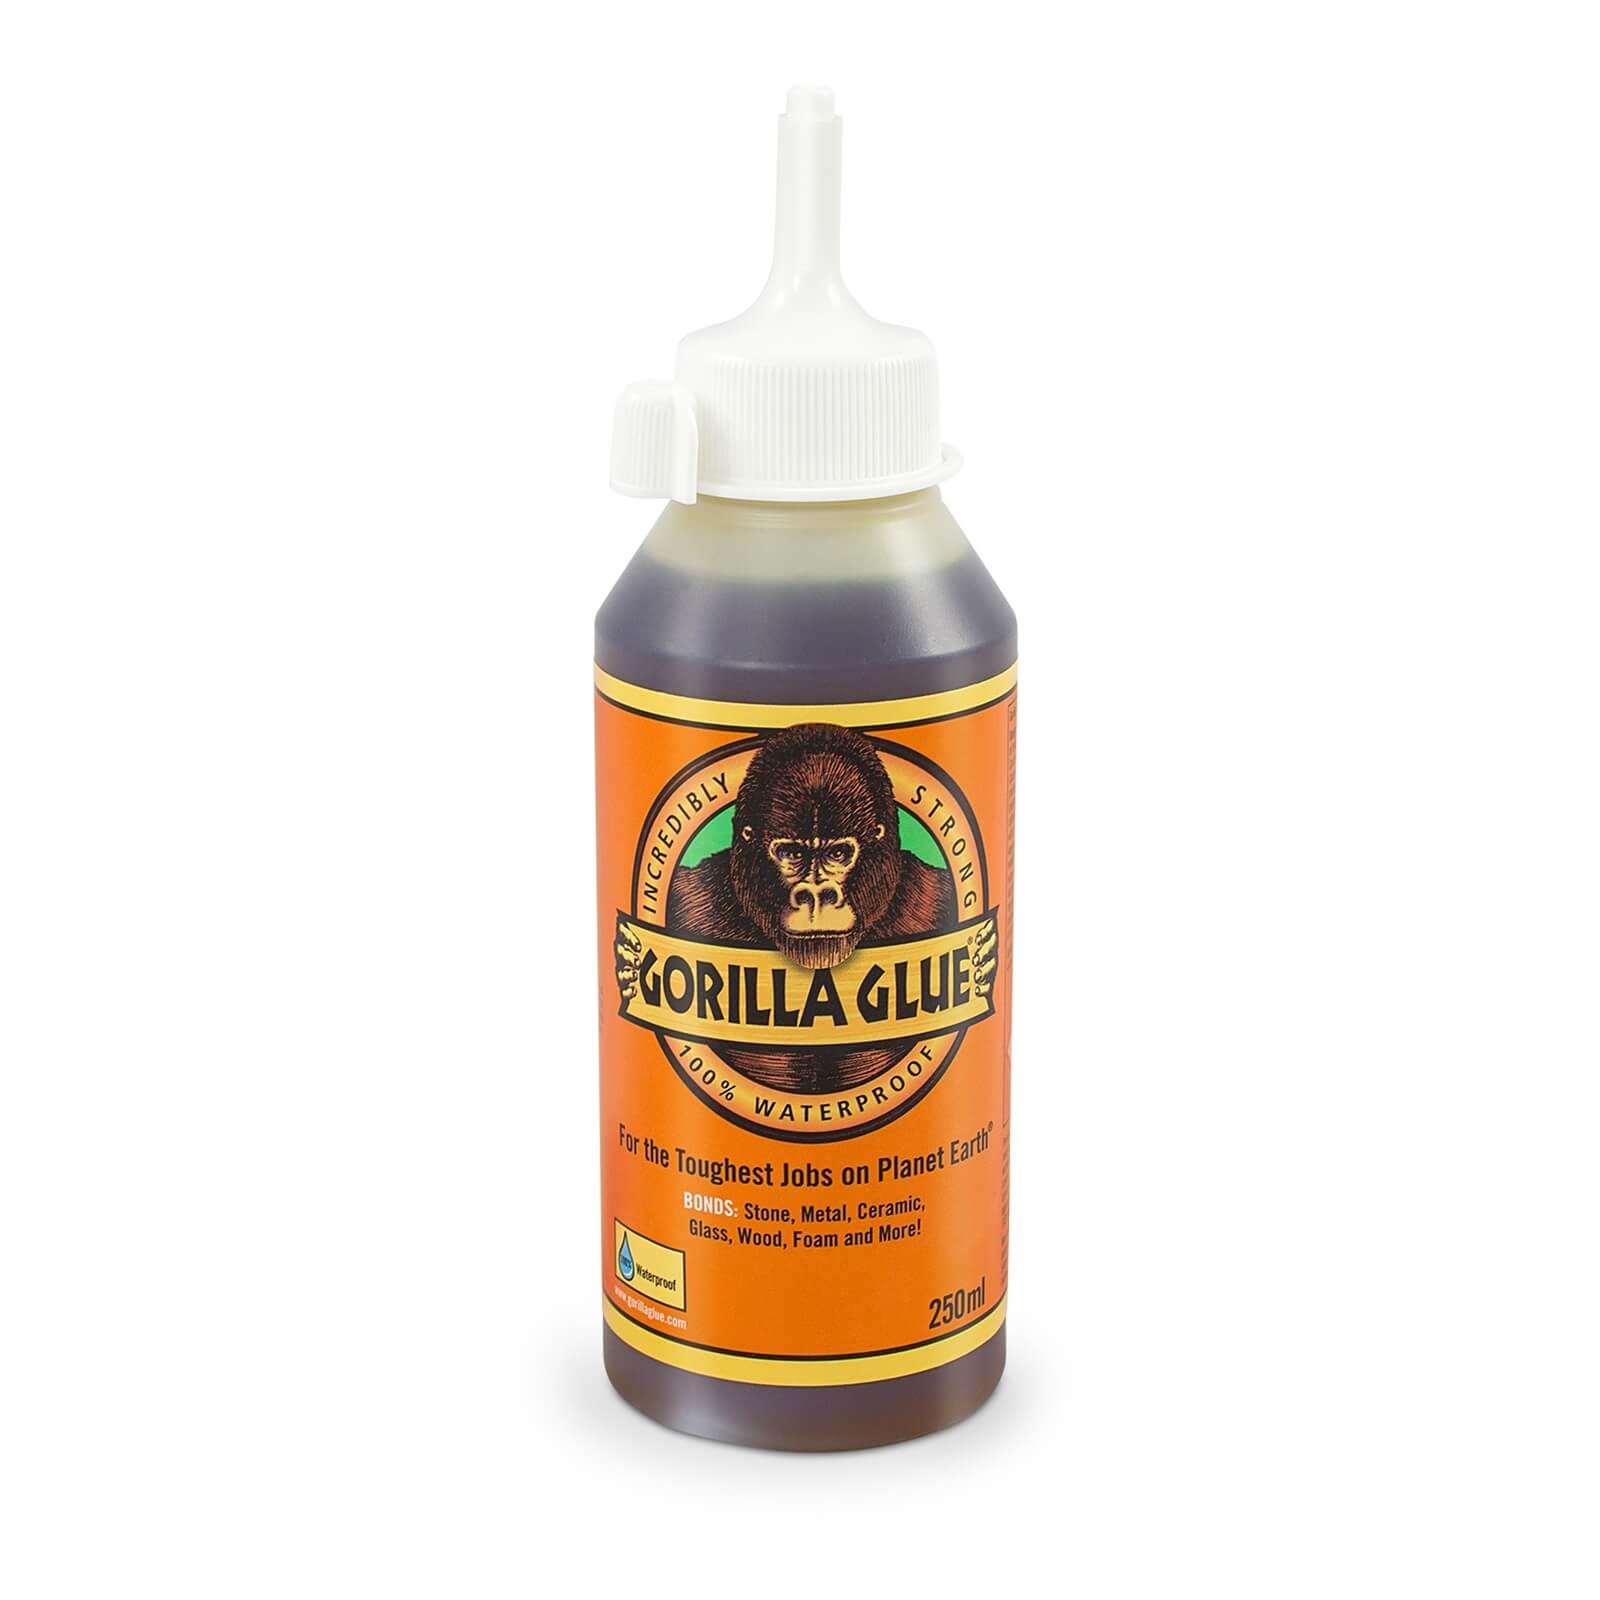 Photo of Gorilla Glue - 250ml